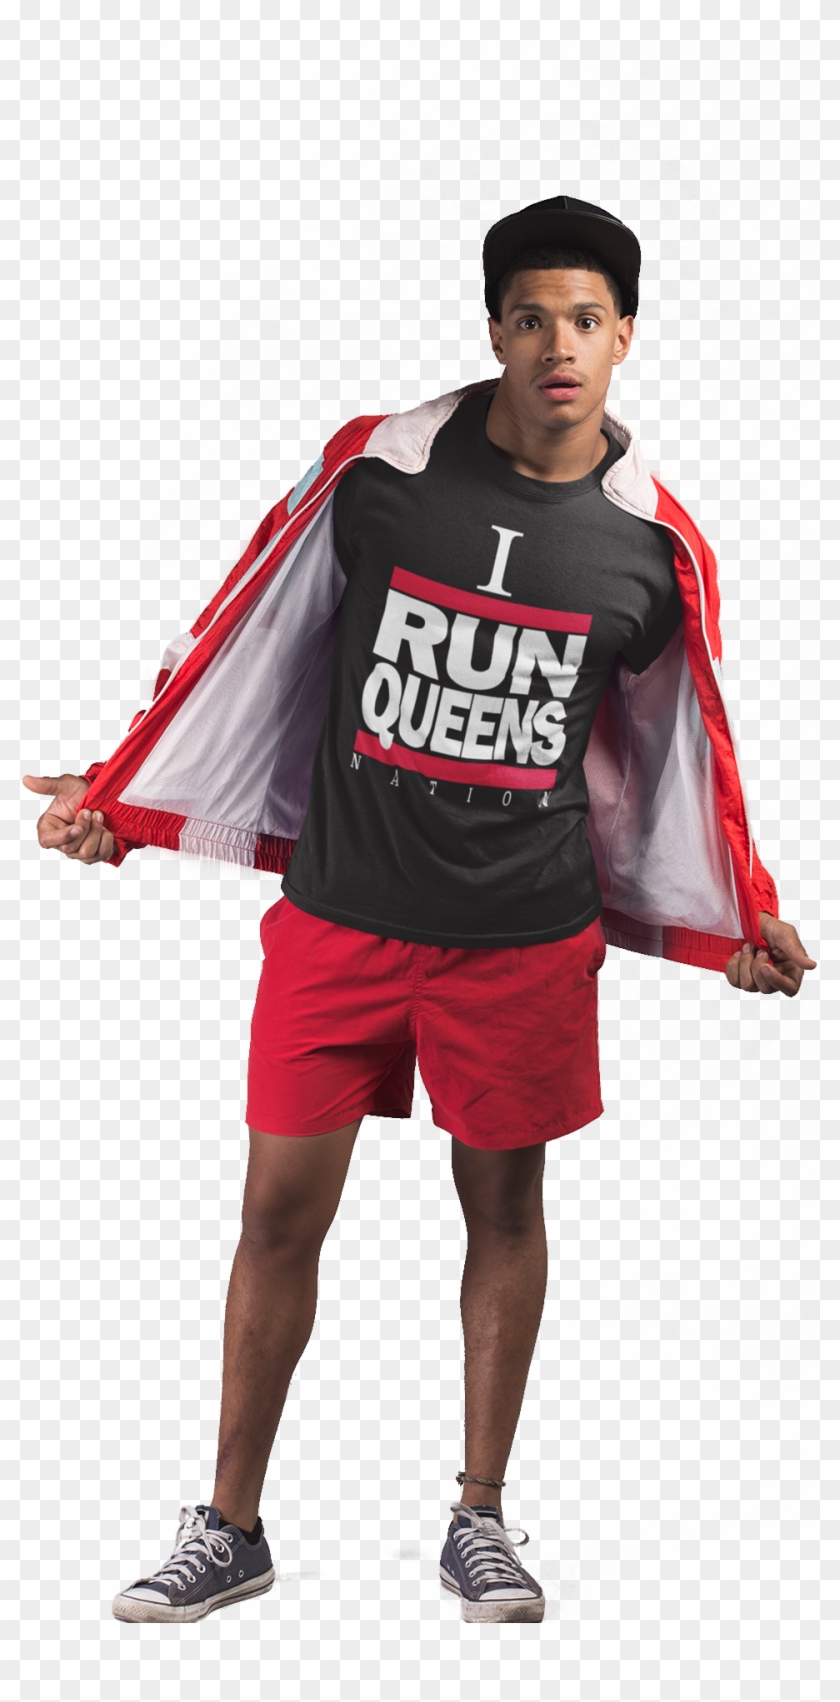 I Run Queens T-shirt - Kaosbro Clipart #5240537